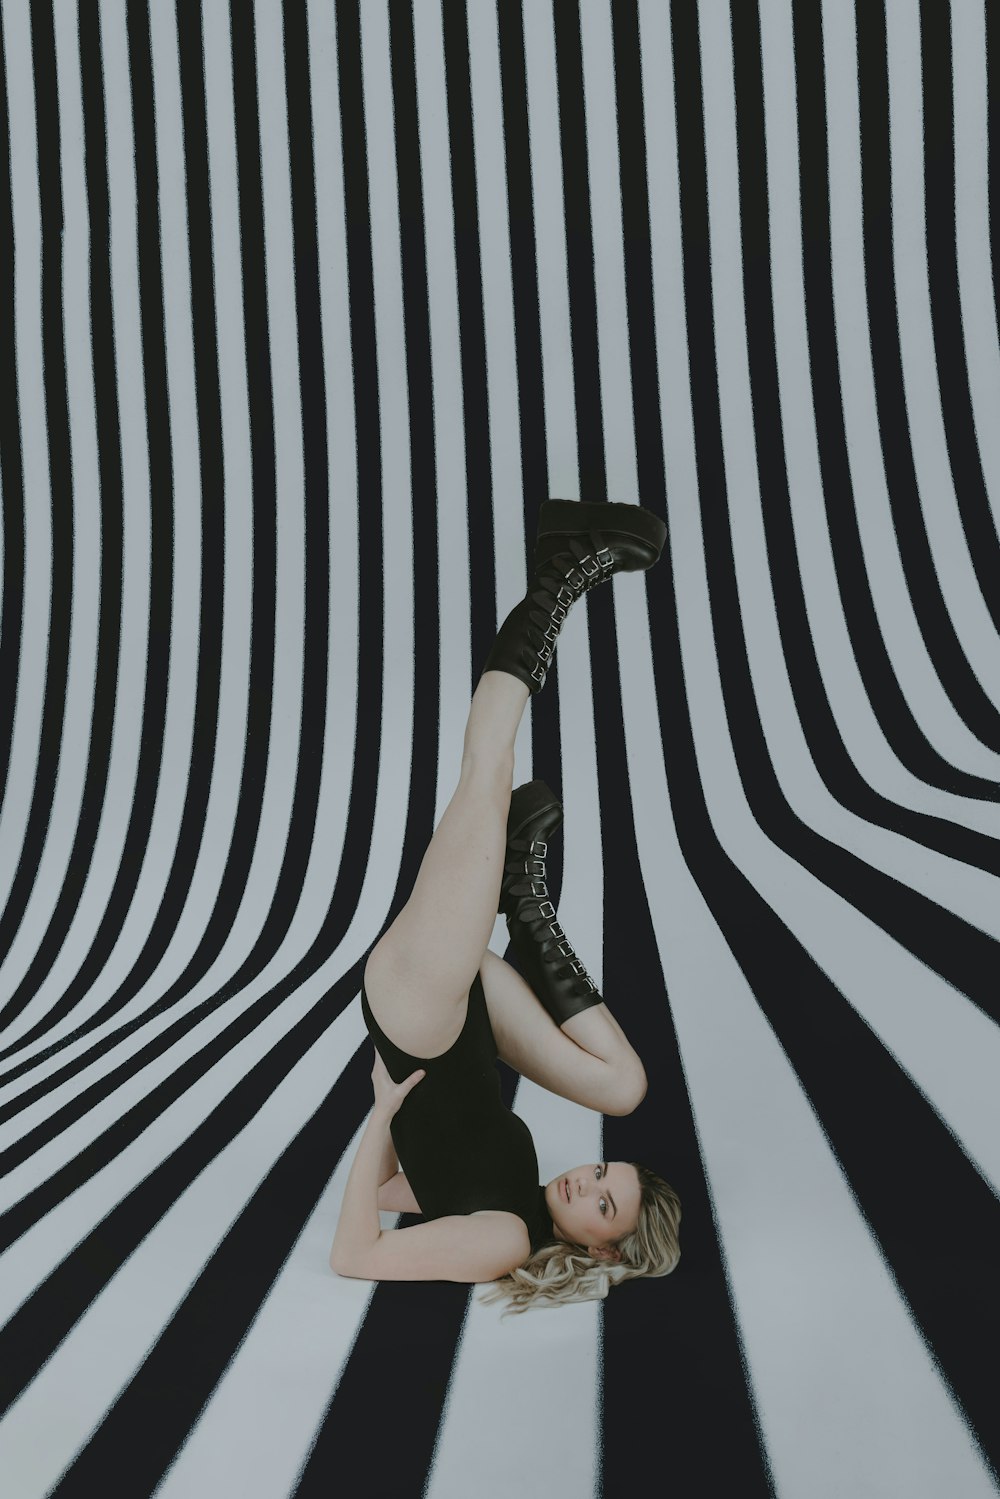 Una donna sdraiata a terra davanti a un muro a strisce bianche e nere